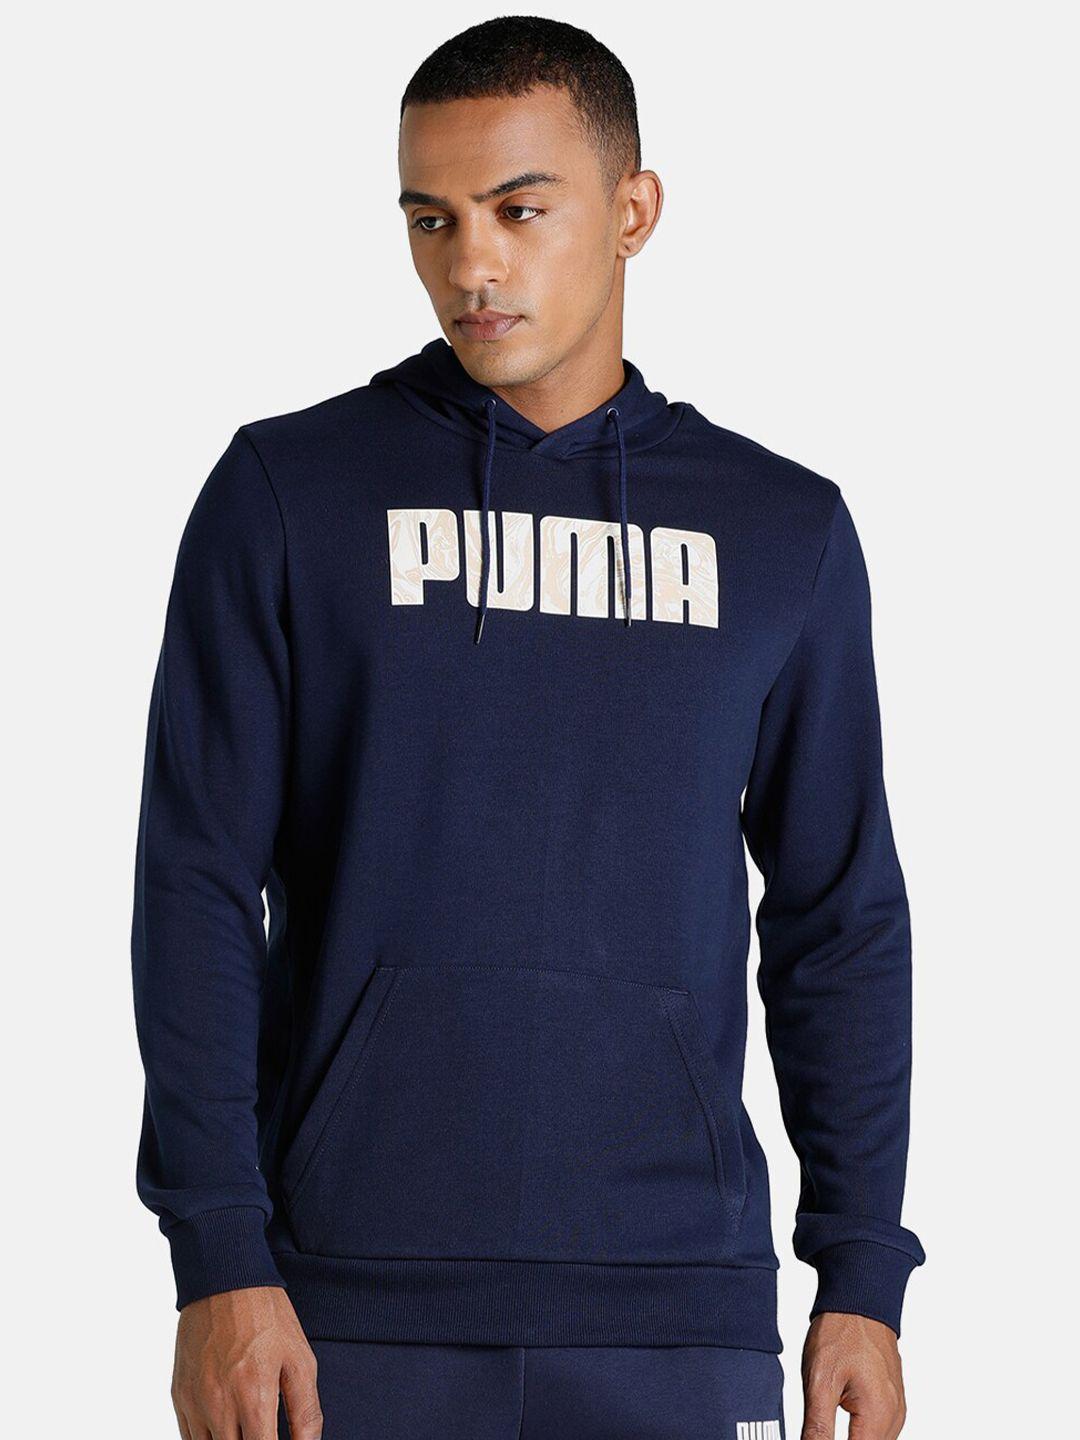 puma men blue & white brand logo printed hooded cotton sweatshirt